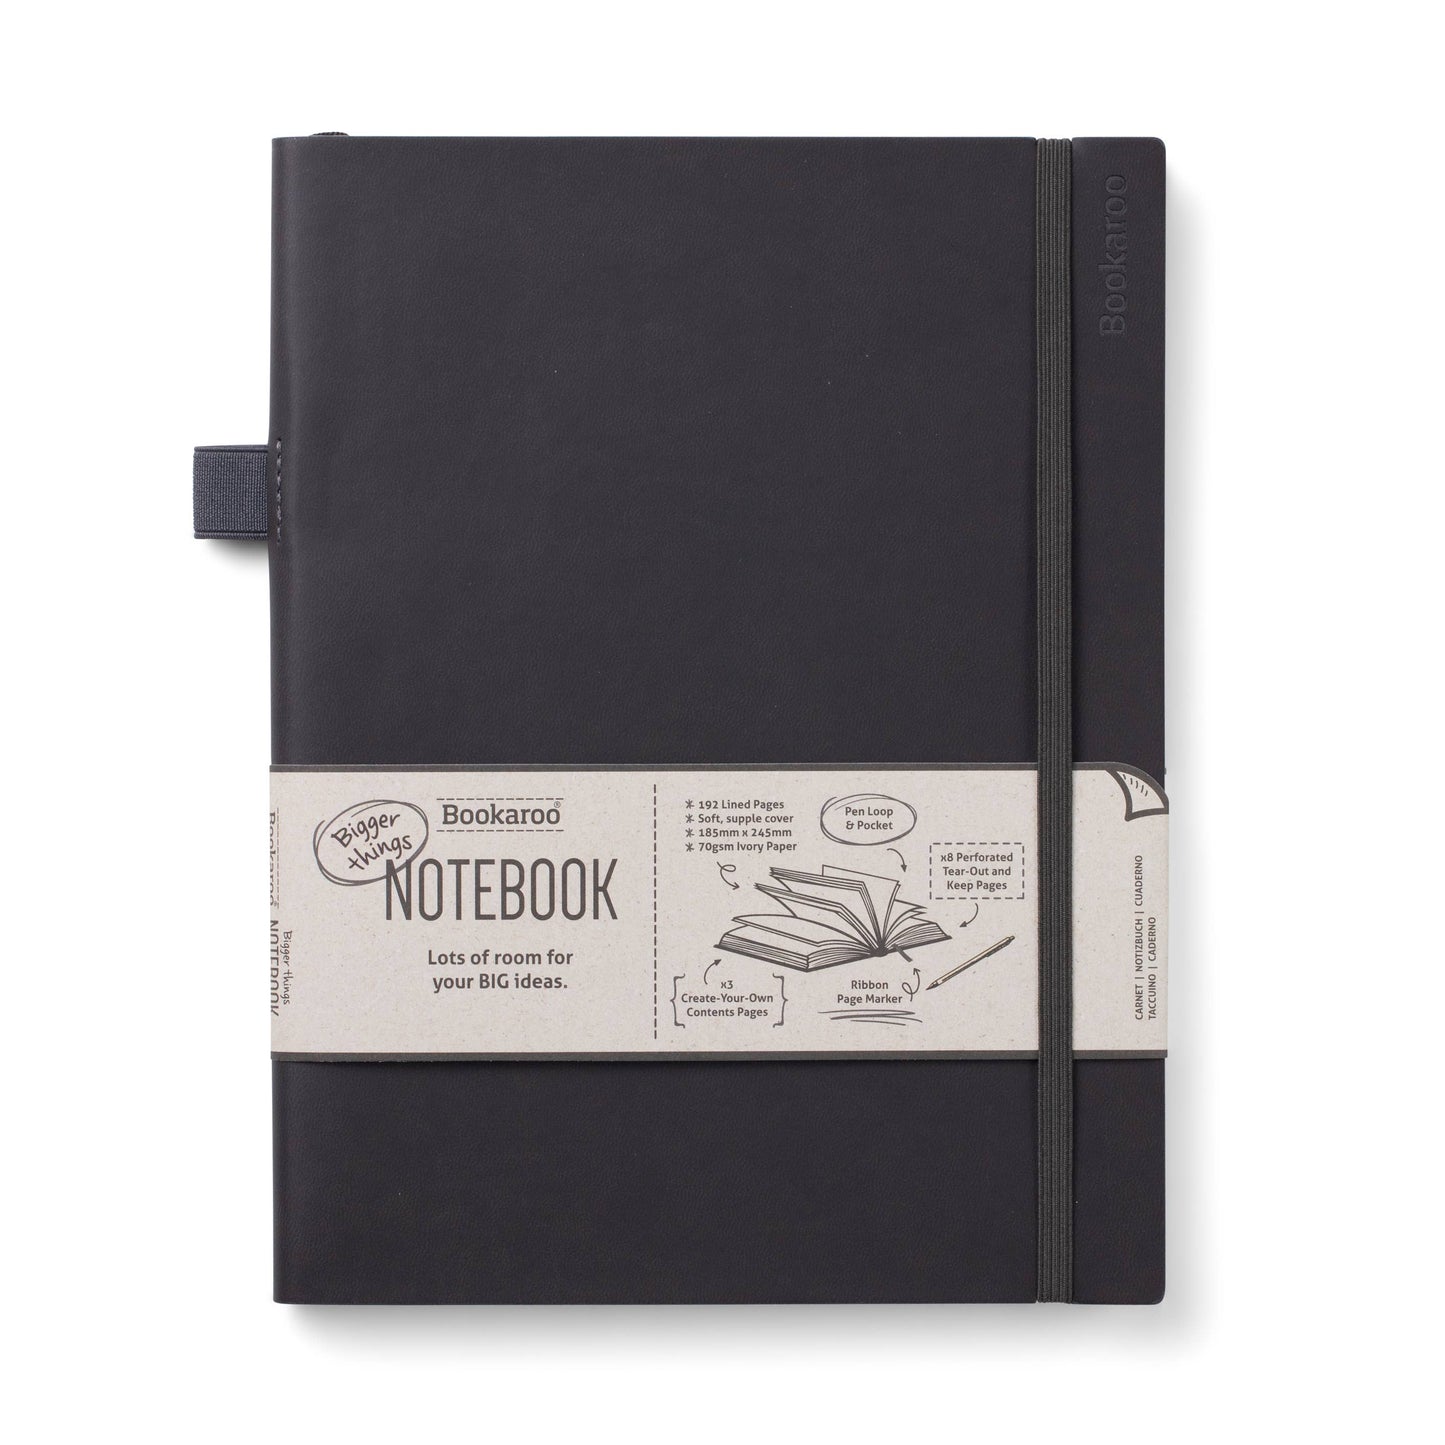 Bookaroo Bigger Things Notebook: Brown